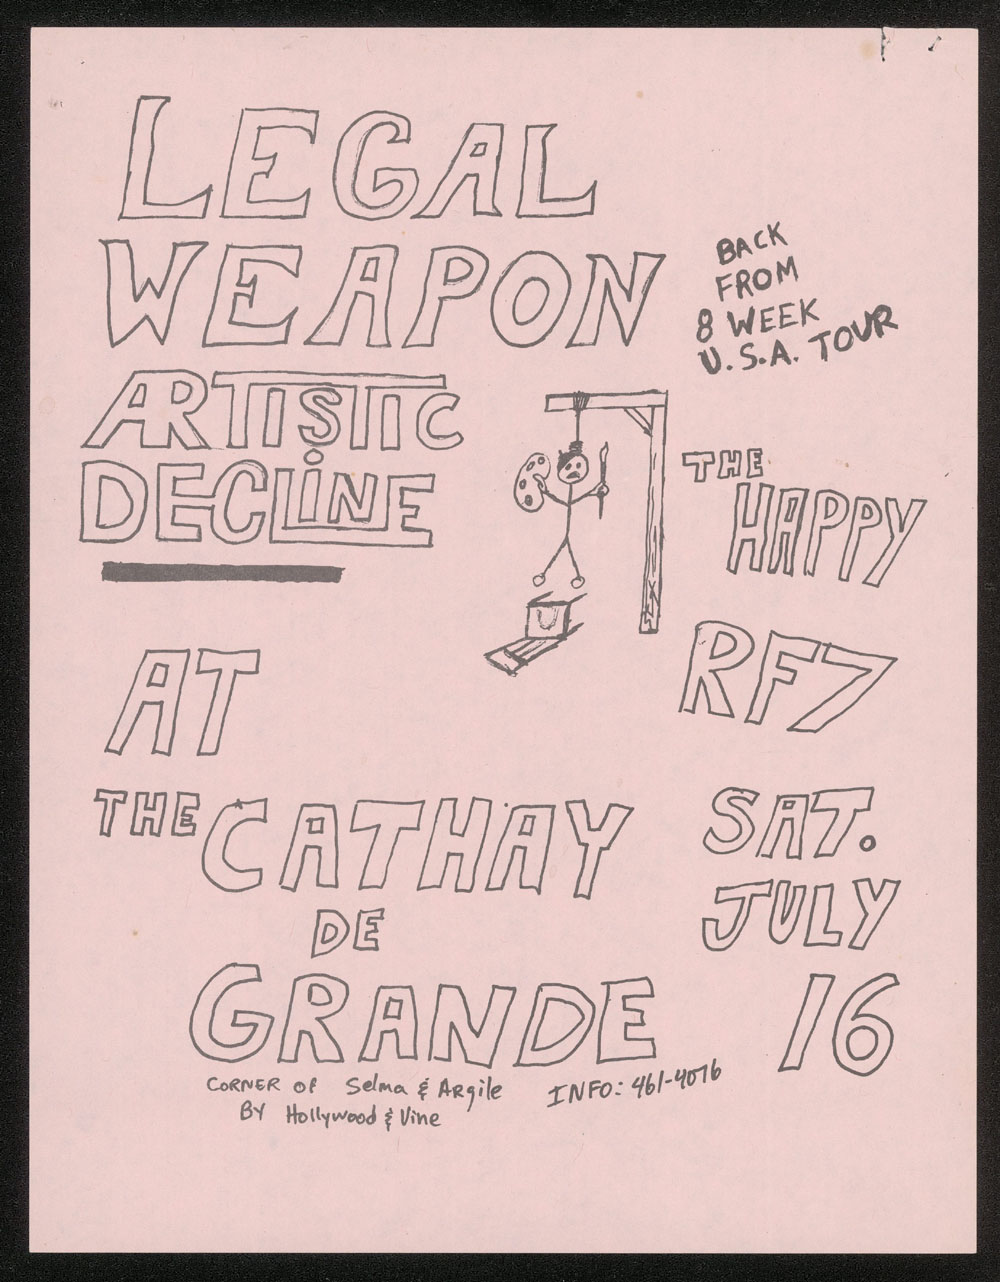 LEGAL WEAPON w/ Artistic Decline, Happy, RF7 at Cathay de Grande